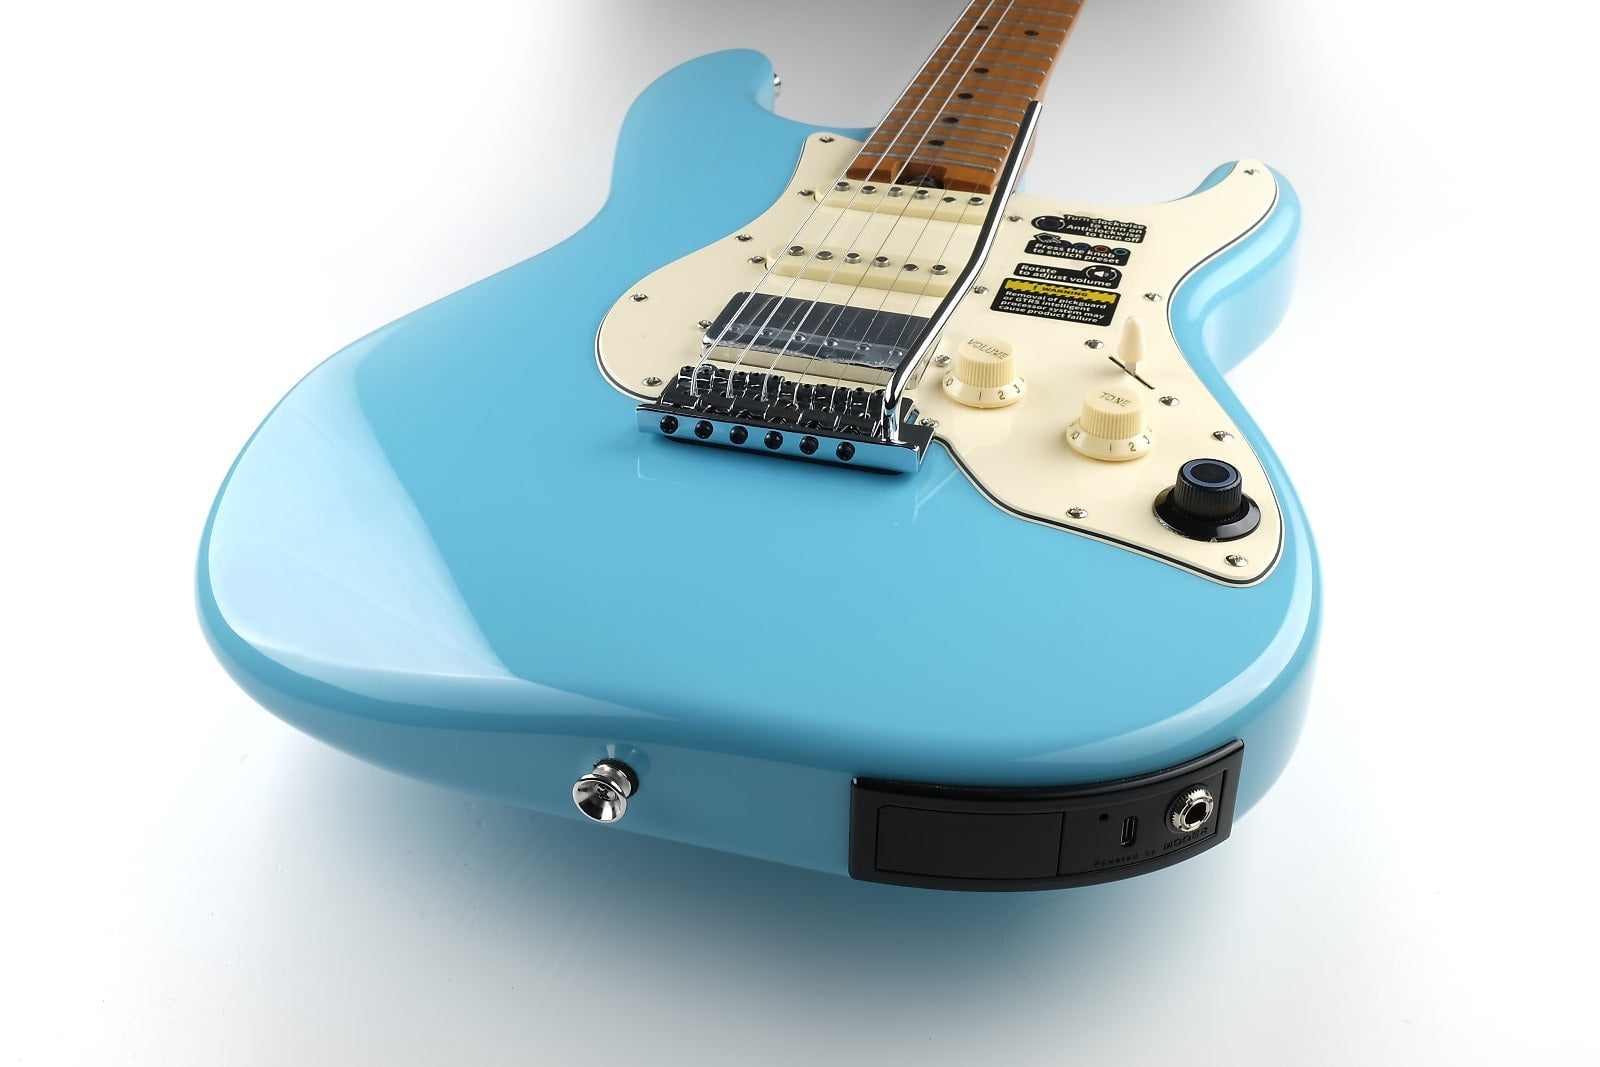 Mooer GTRS S801 Intelligent Electric Guitar w/bag - Blue